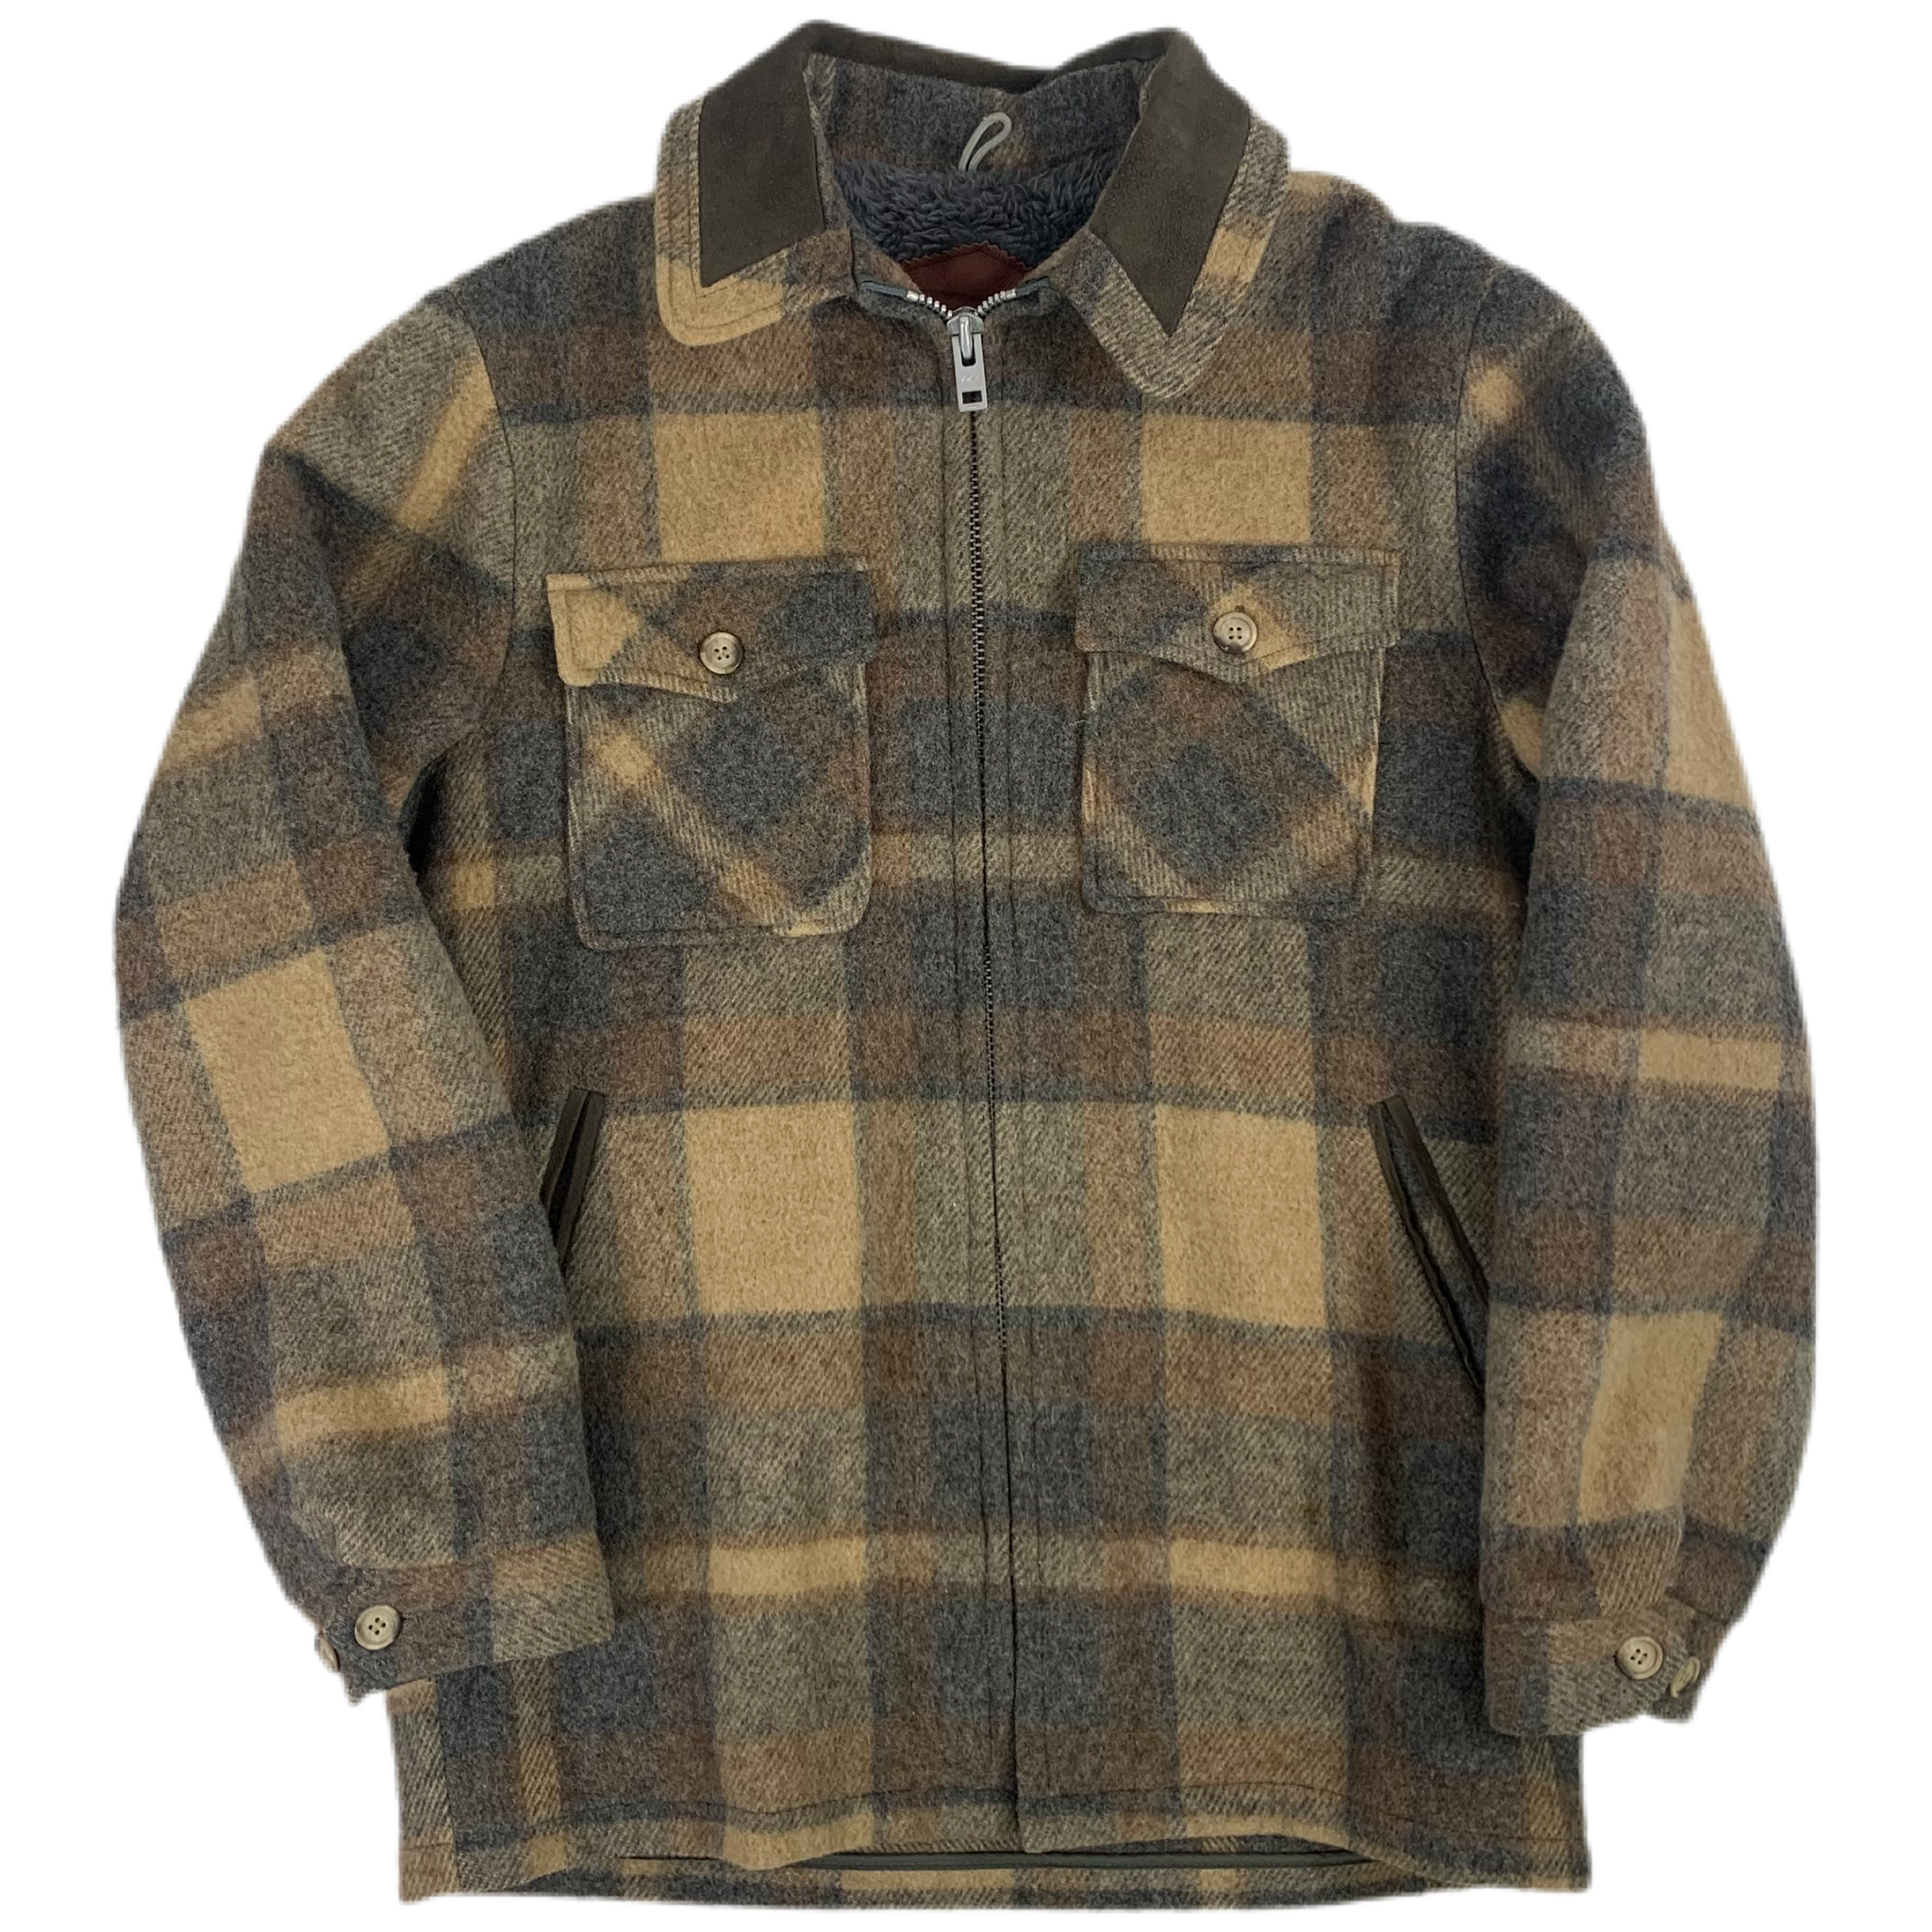 Vintage Woolrich "Pile-Lined" Heavy Wool Hunting Jacket